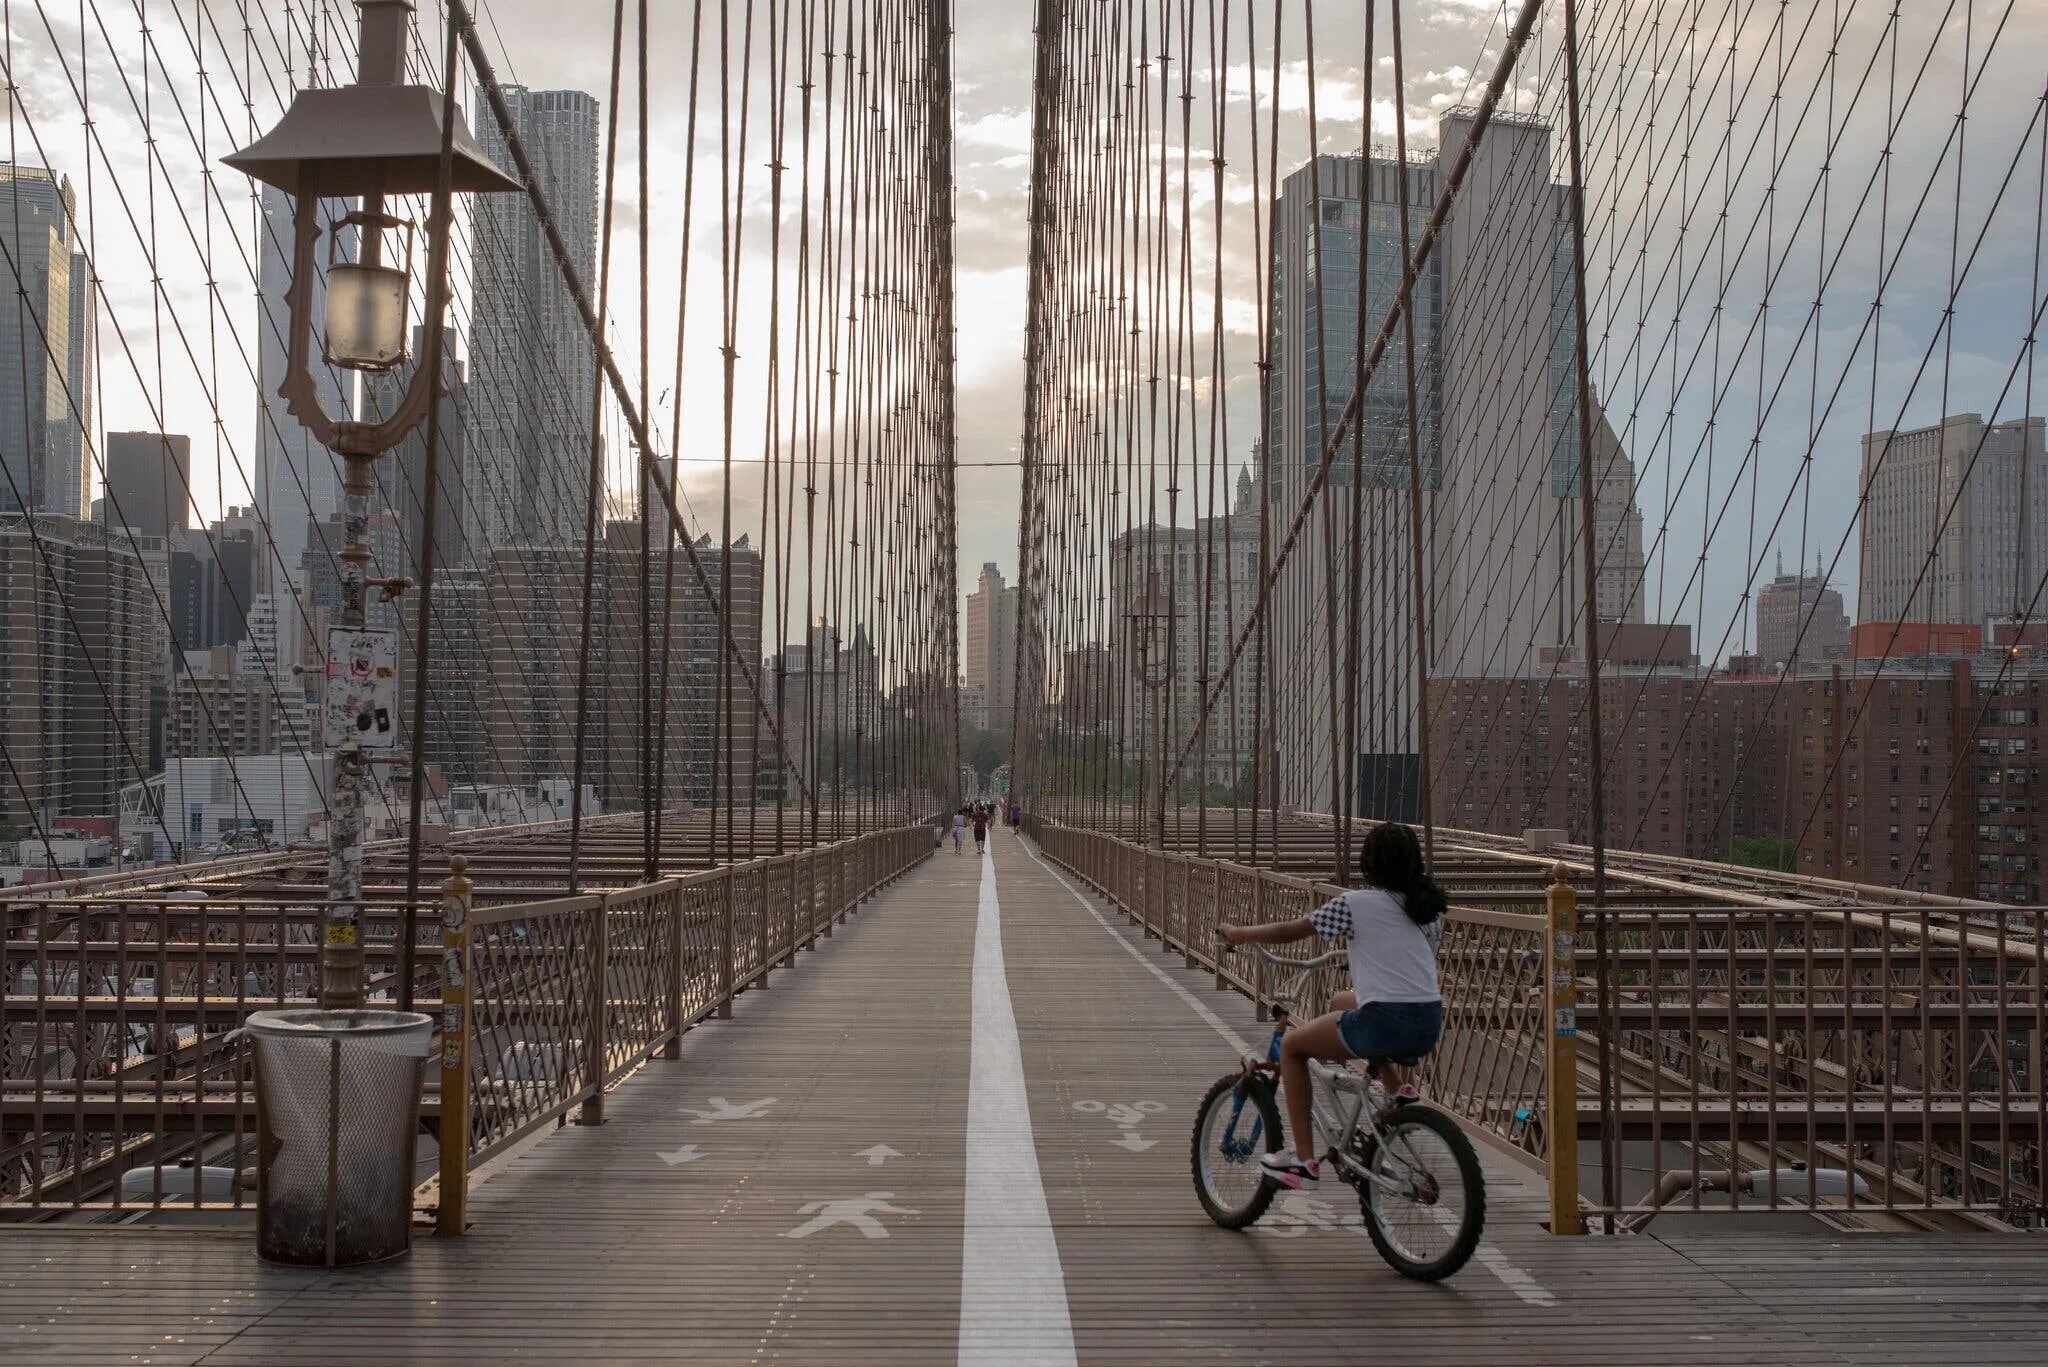 They the new bridge. Бруклин мост променад. Бруклинский мост. Бруклинский мост пешеходный. Brooklyn heights Promenade.